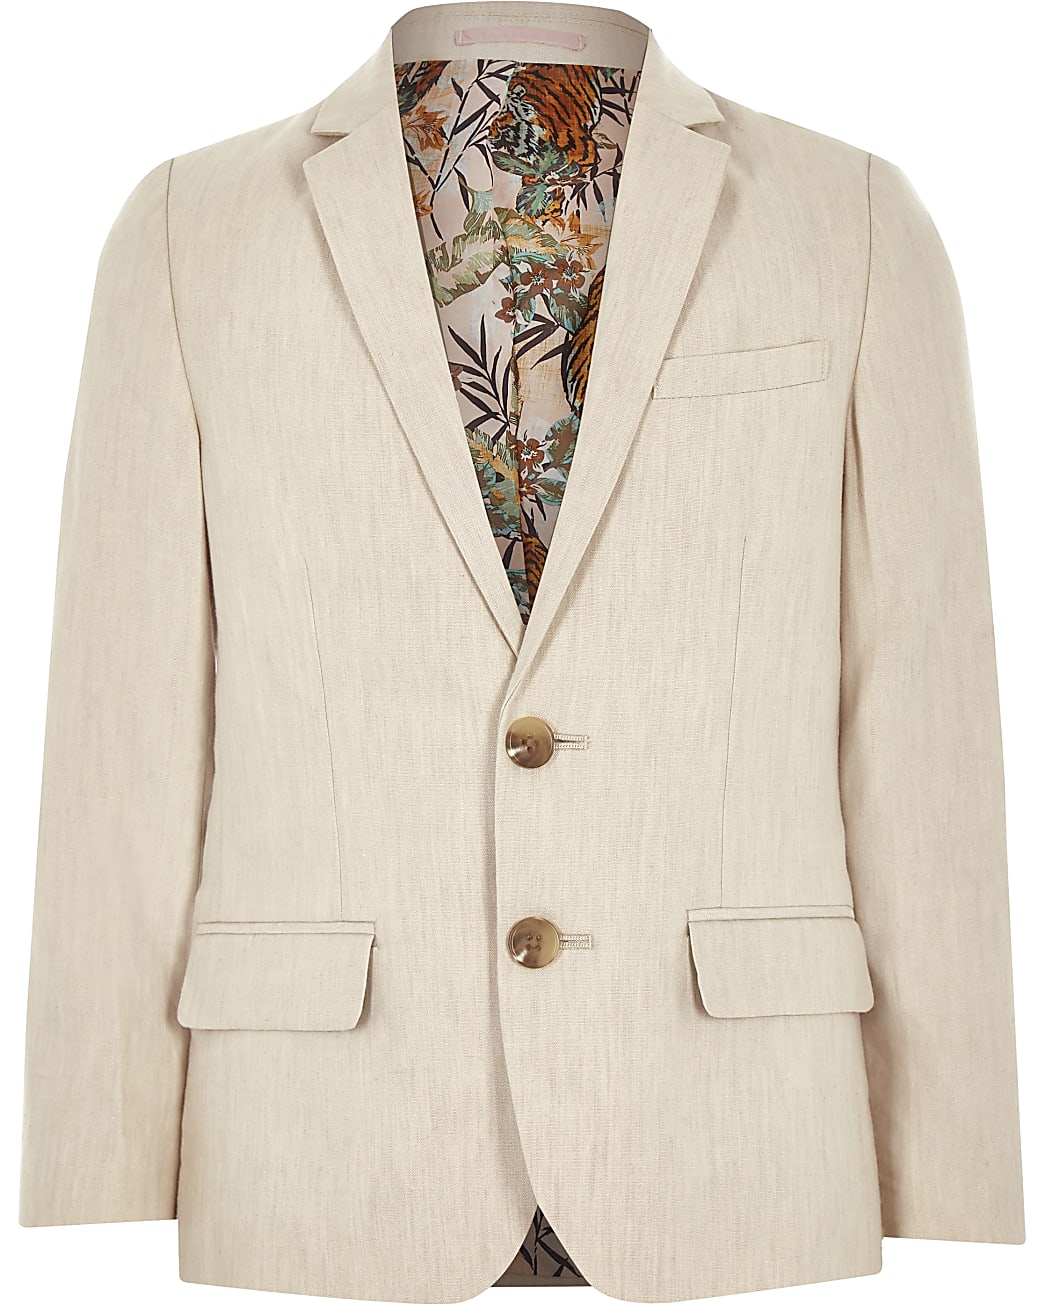 Boys cream linen suit blazer